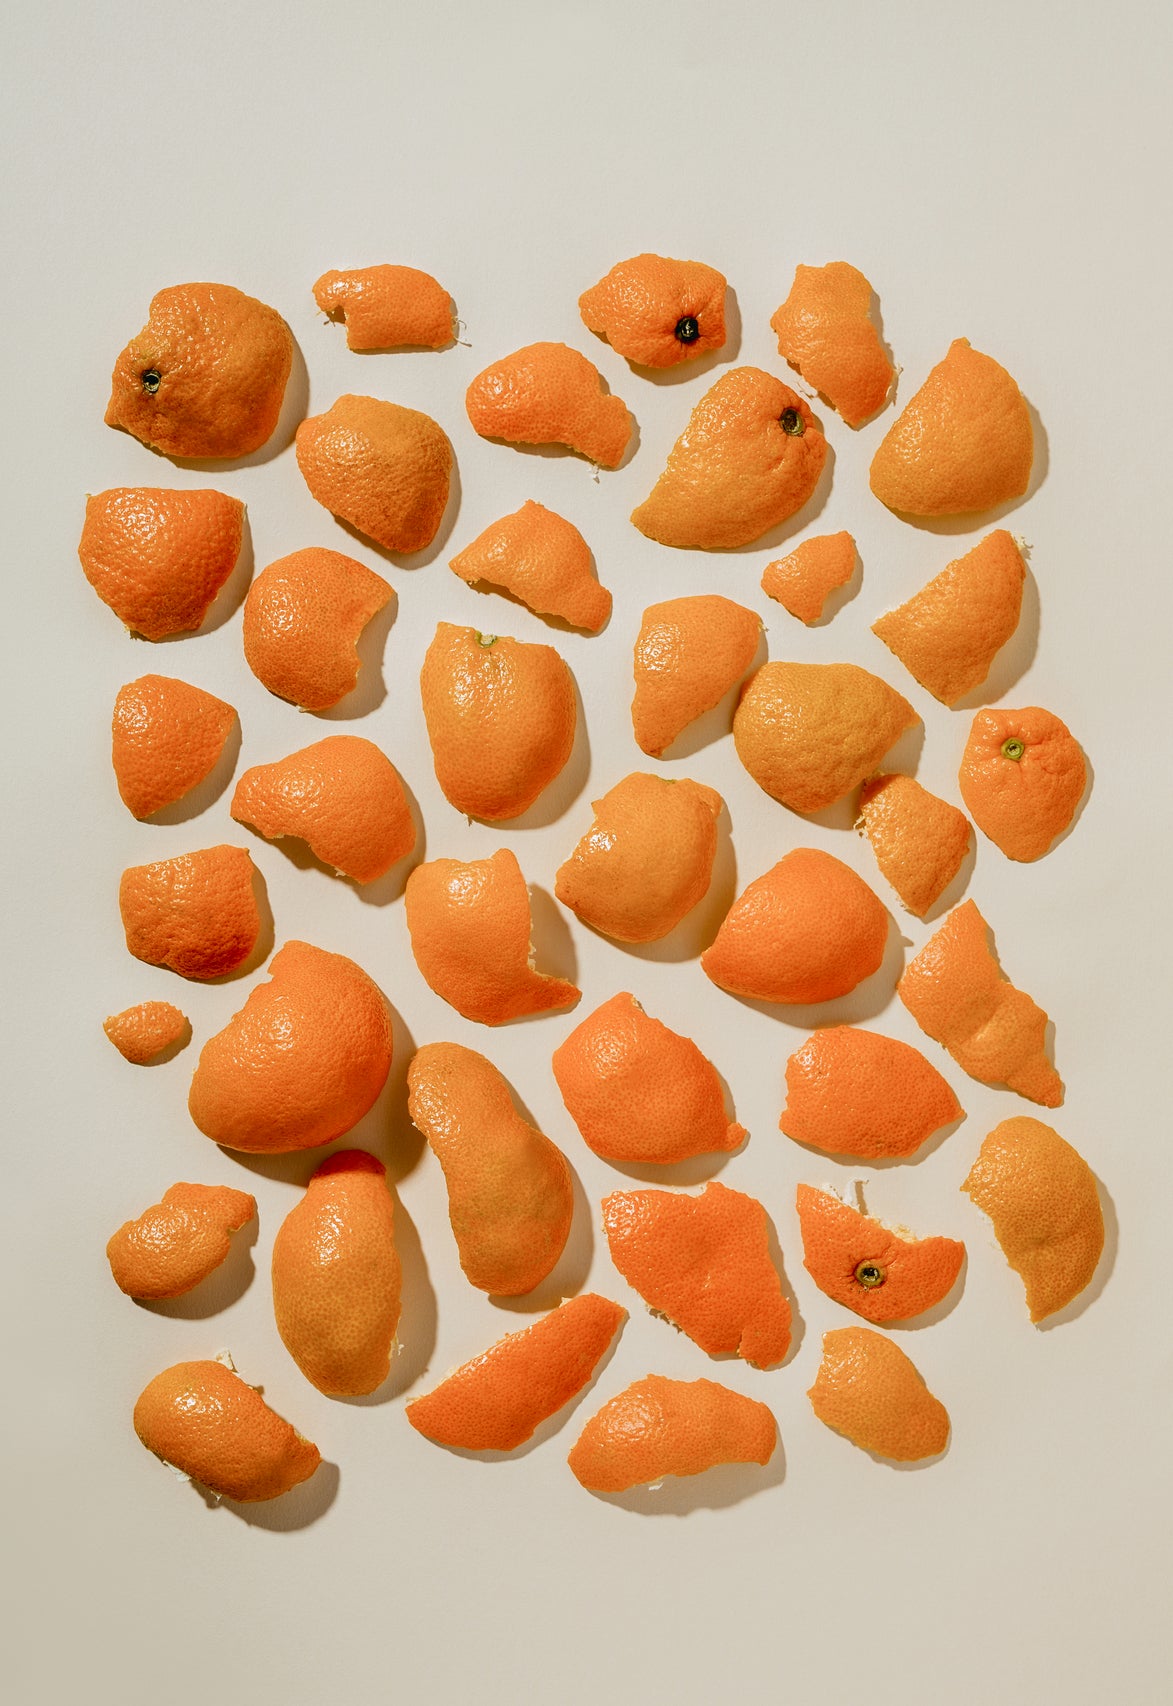 6 Fun Ways To Use Up Leftover Oranges